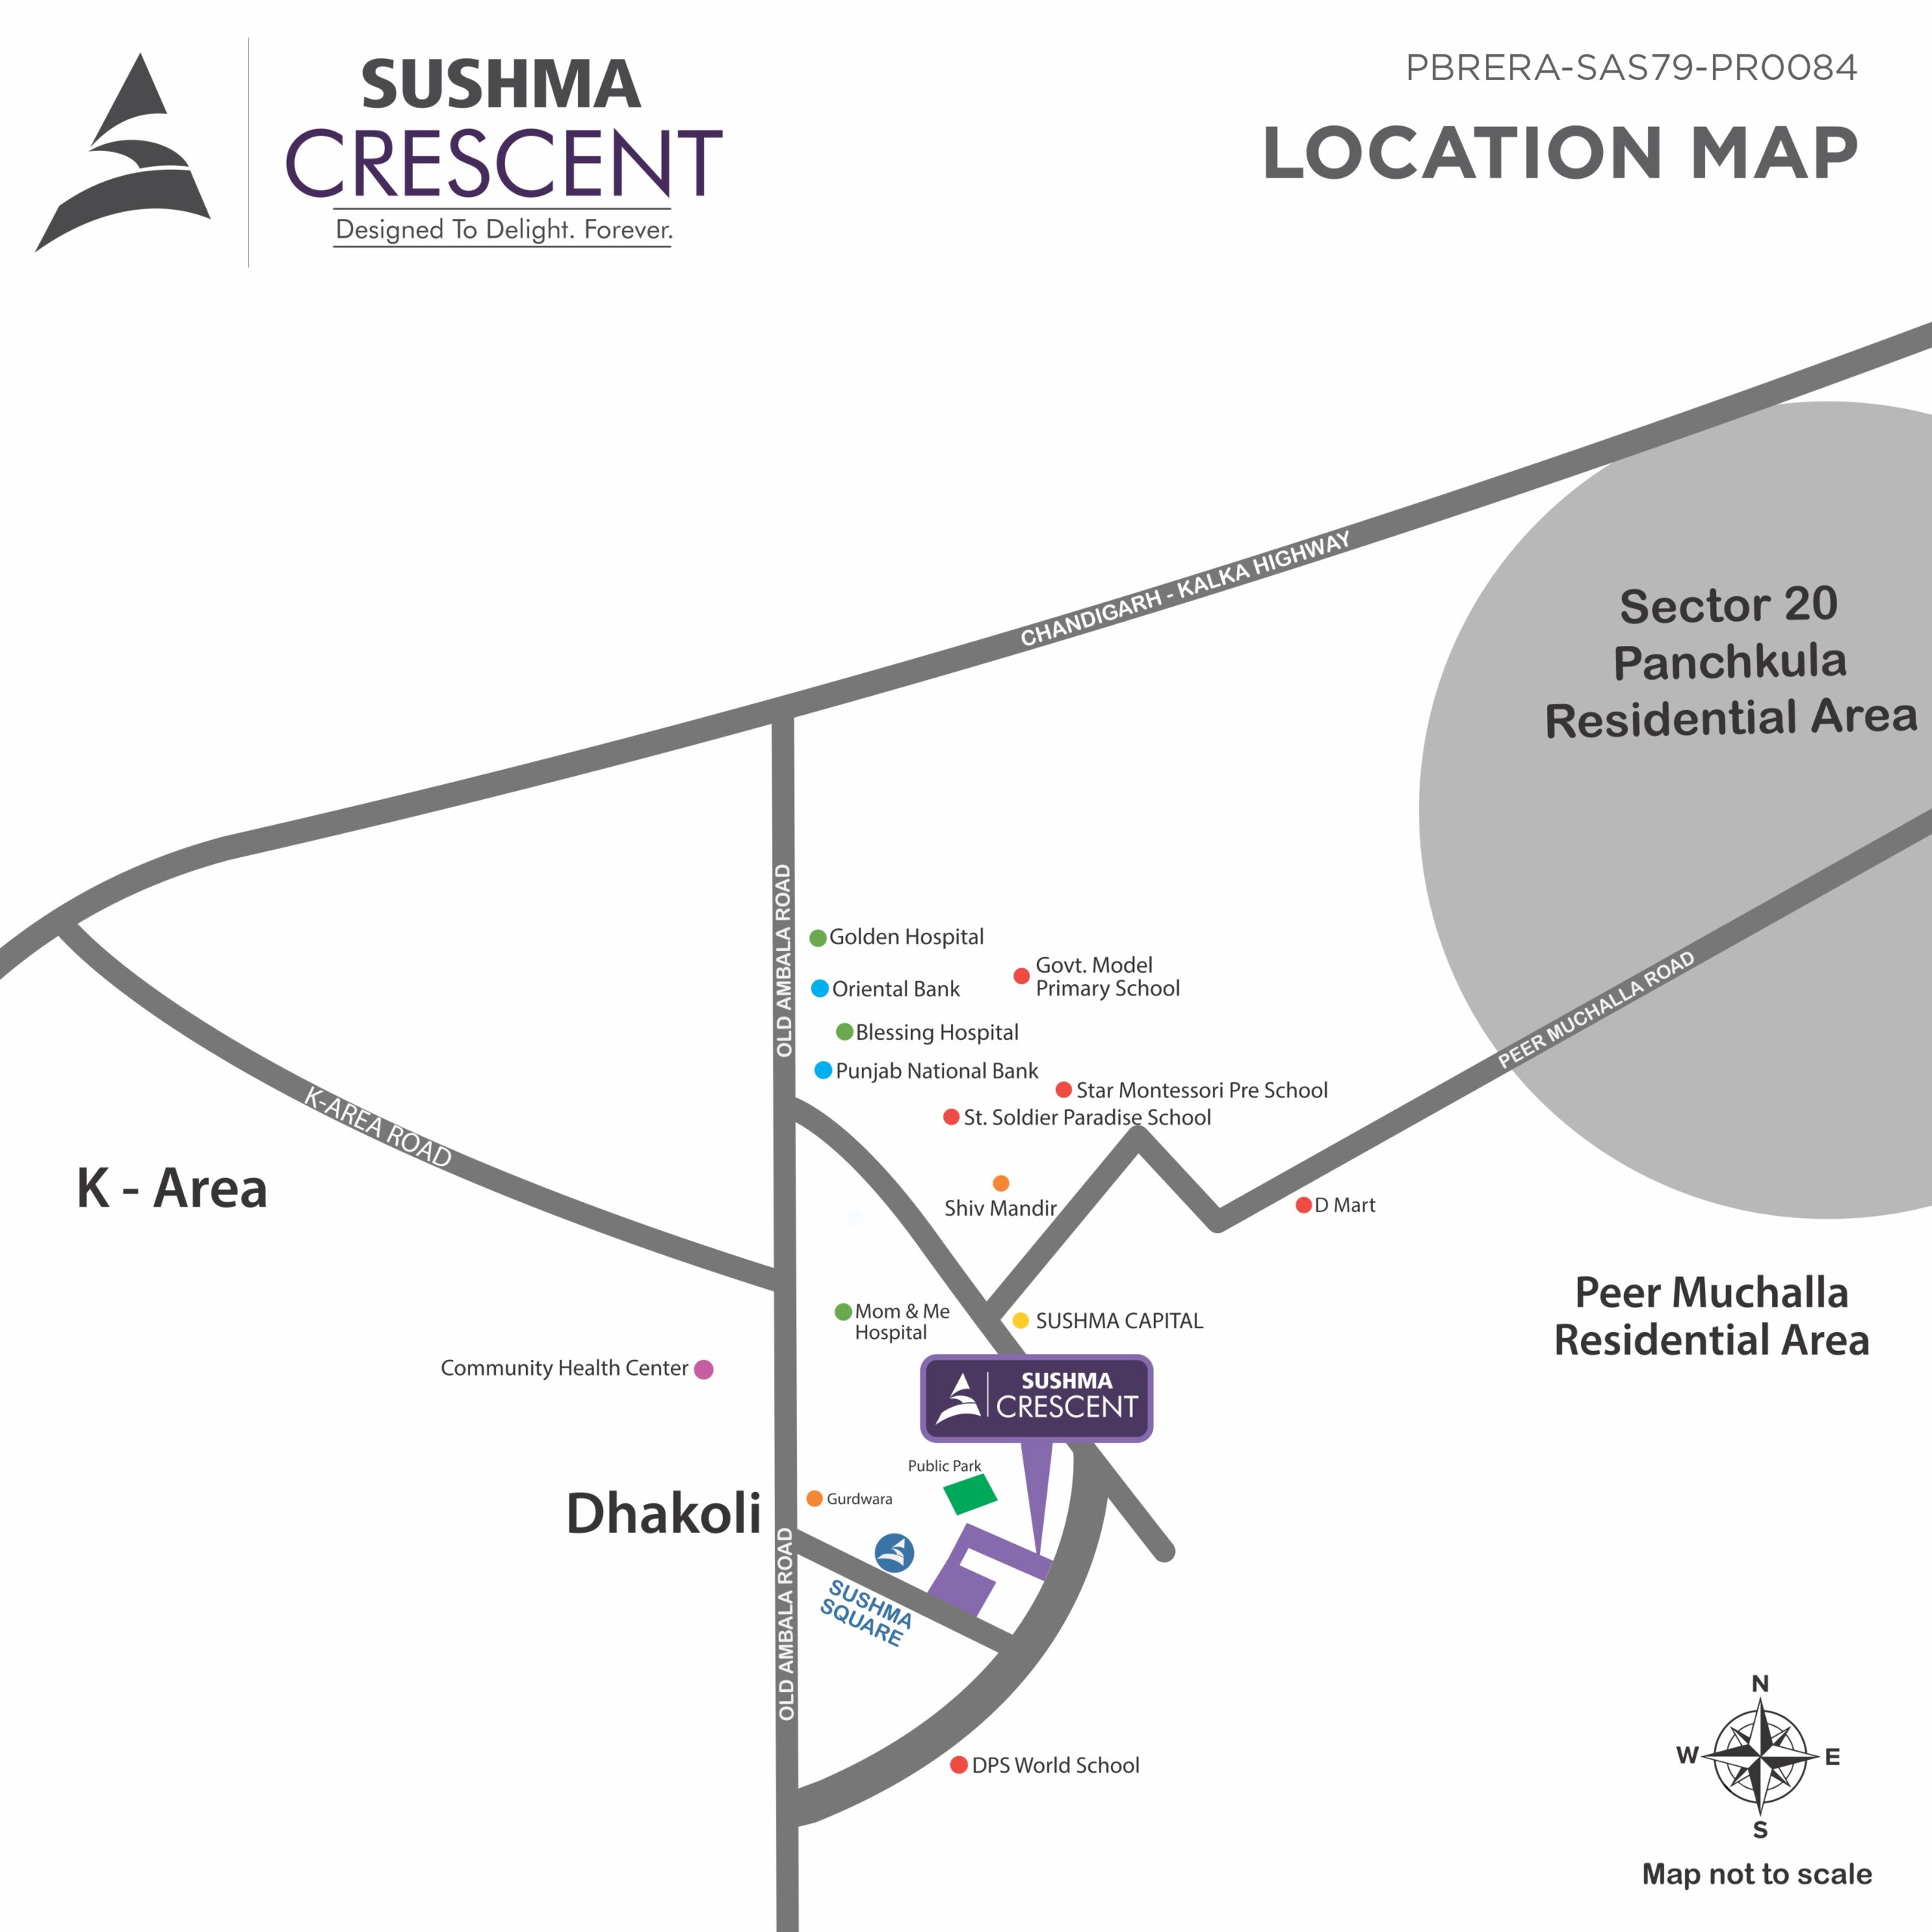 Location Map of Sushma Crescent